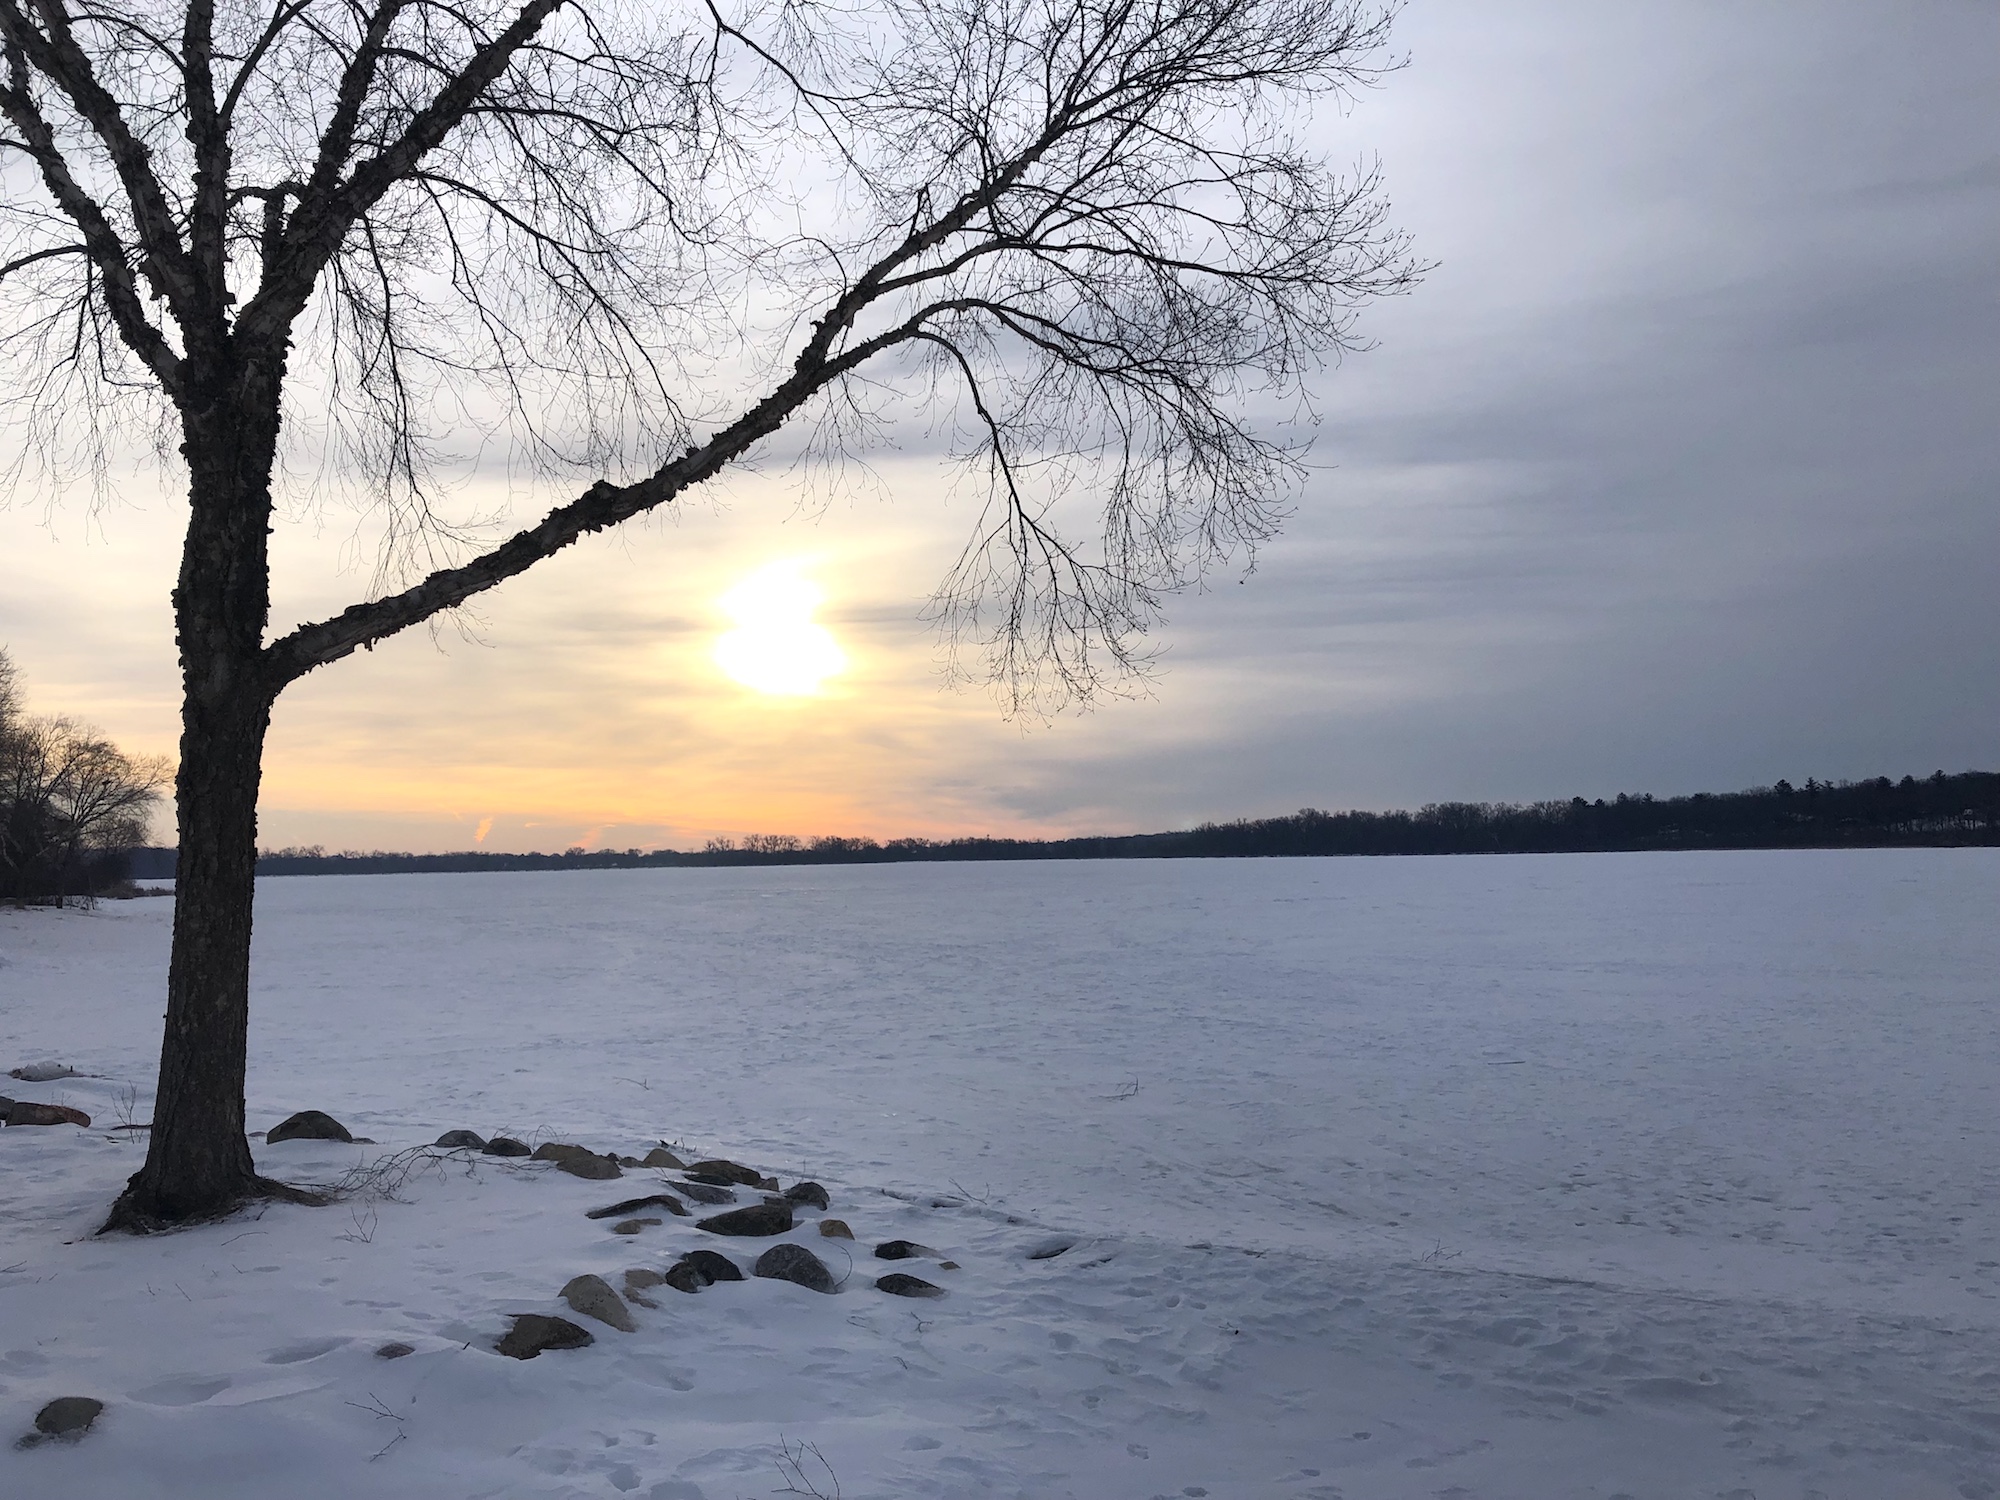 Lake Wingra on March 7, 2019.